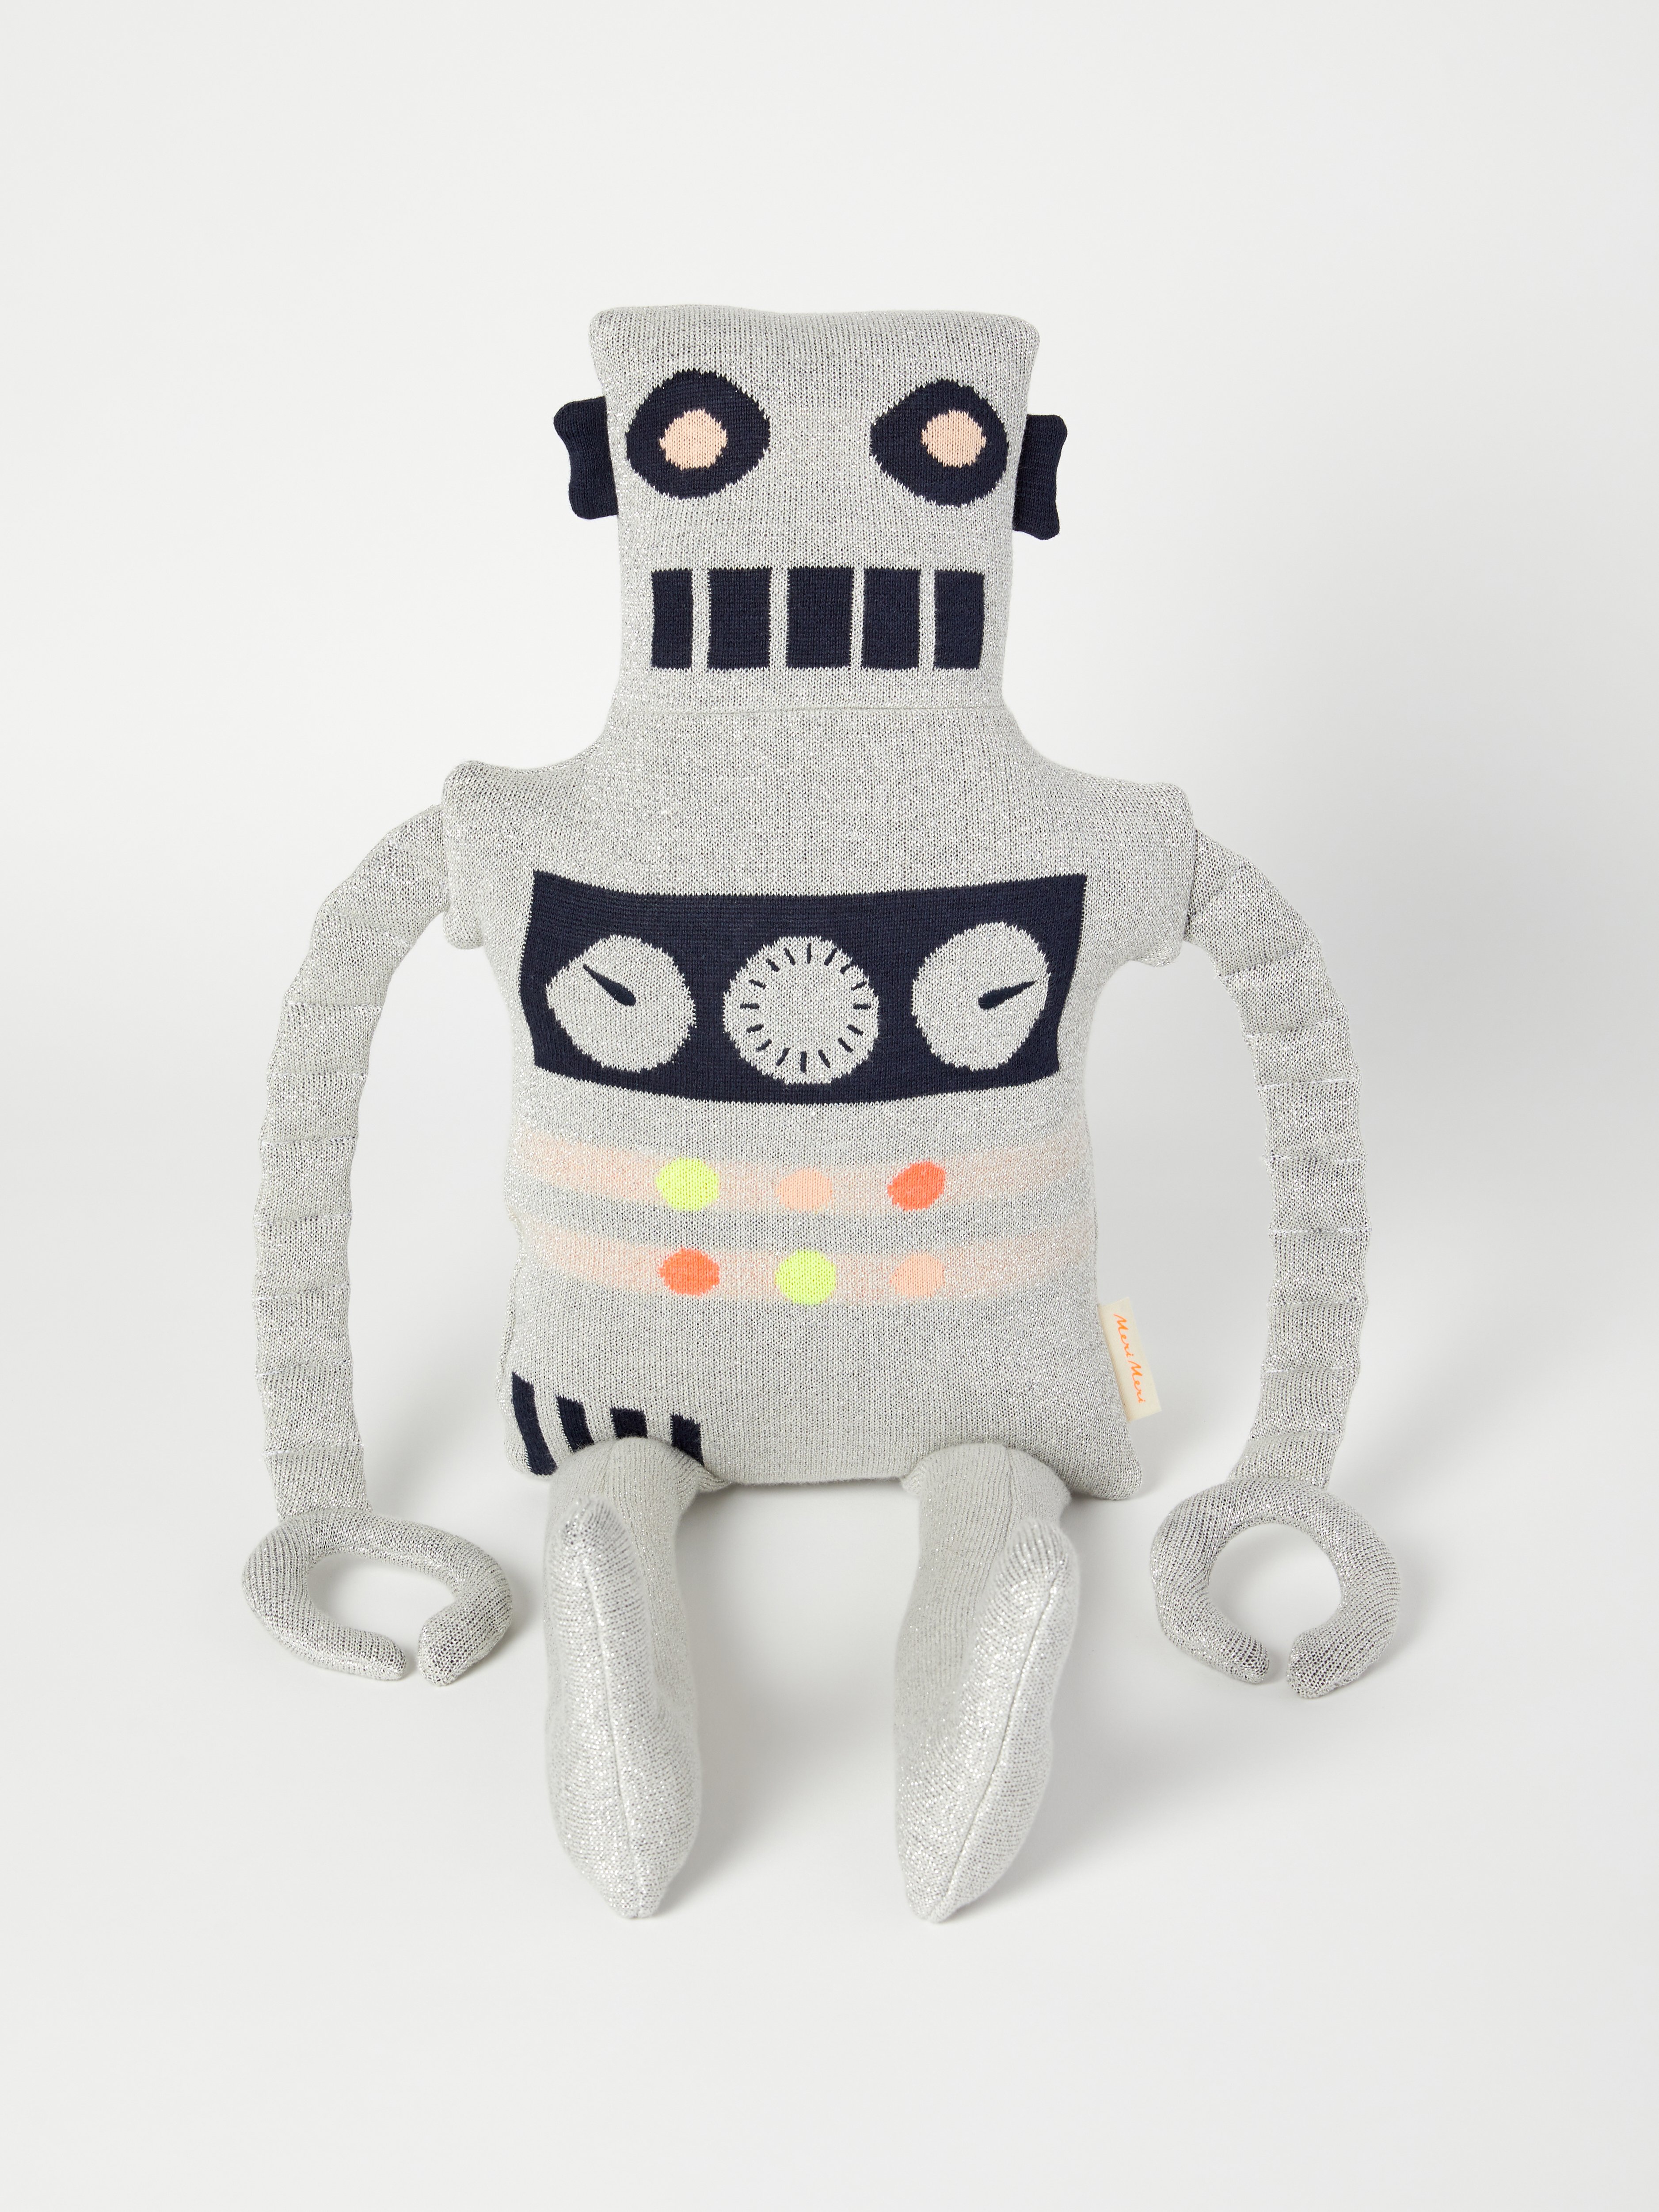 stuffed robot toy